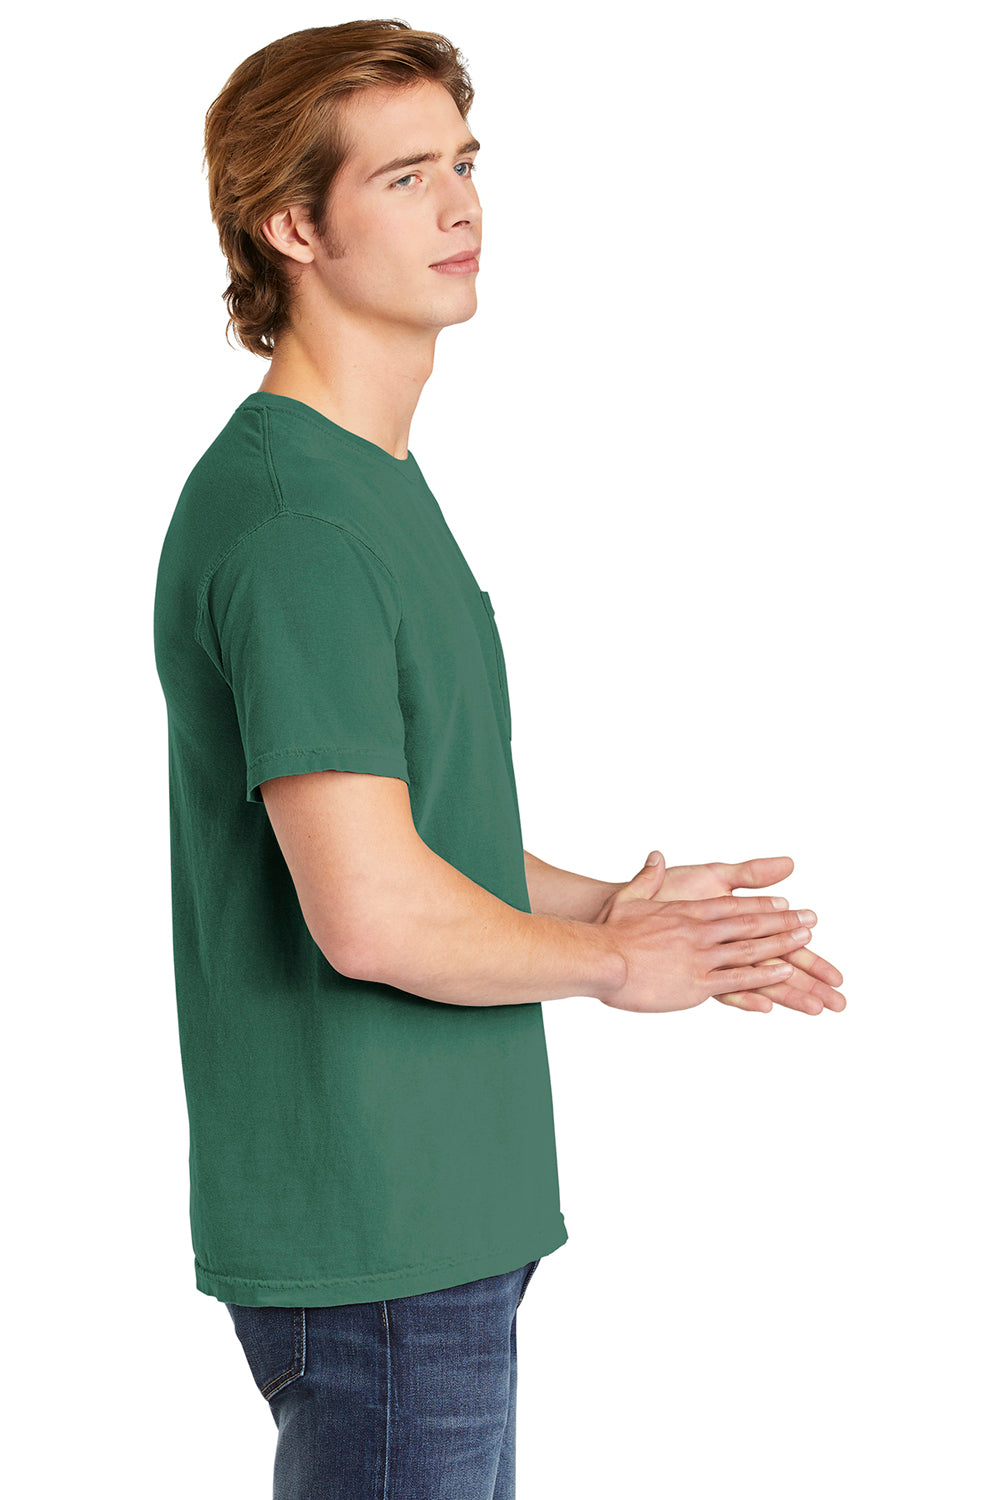 Comfort Colors 6030/6030CC Mens Short Sleeve Crewneck T-Shirt w/ Pocket Light Green Side